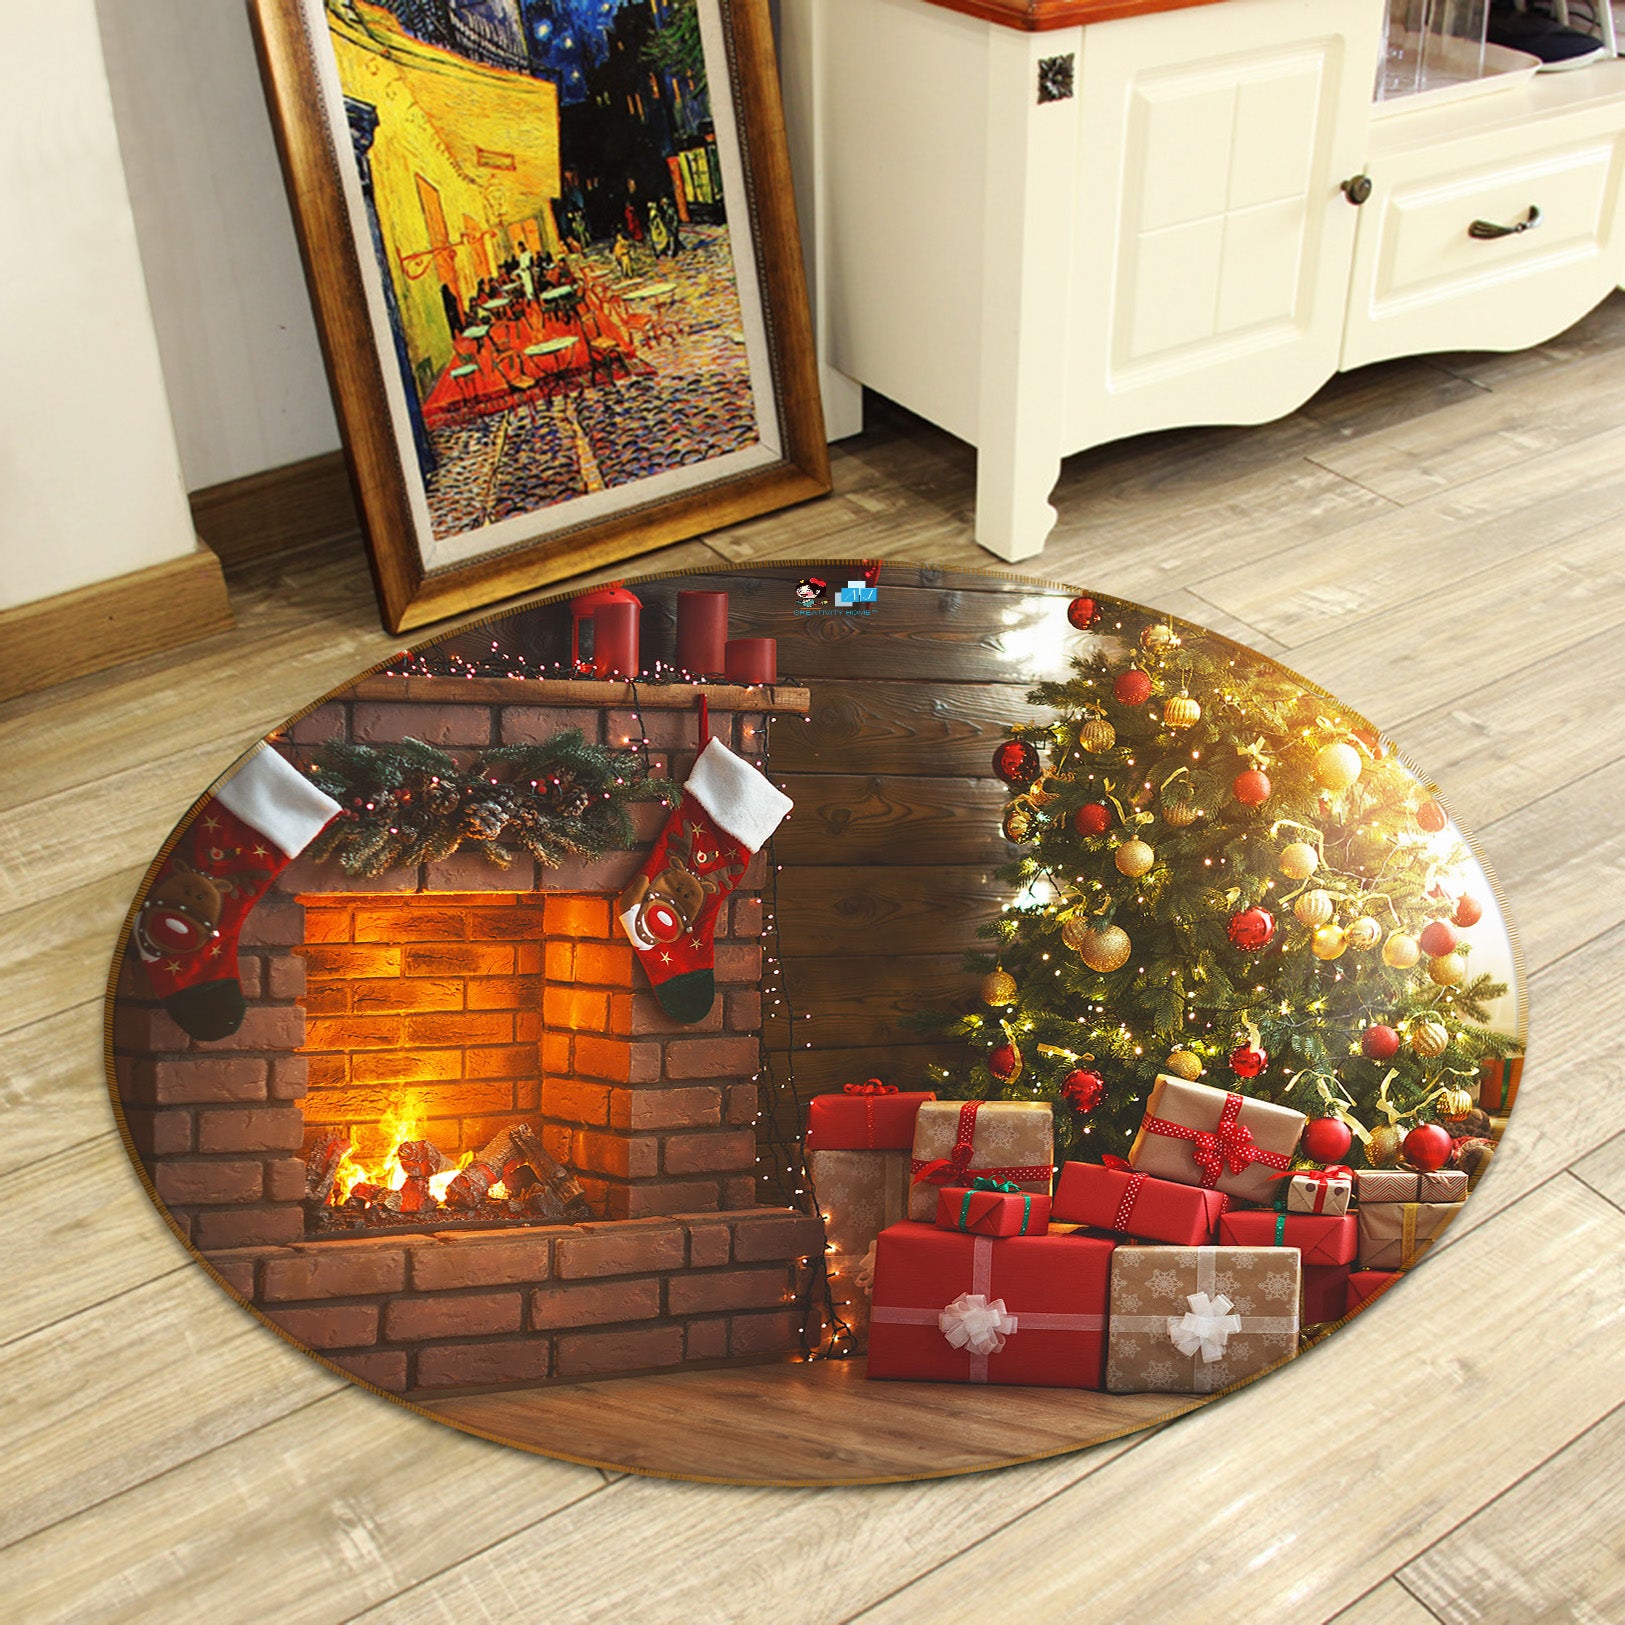 3D Fireplace Gift 54170 Christmas Round Non Slip Rug Mat Xmas